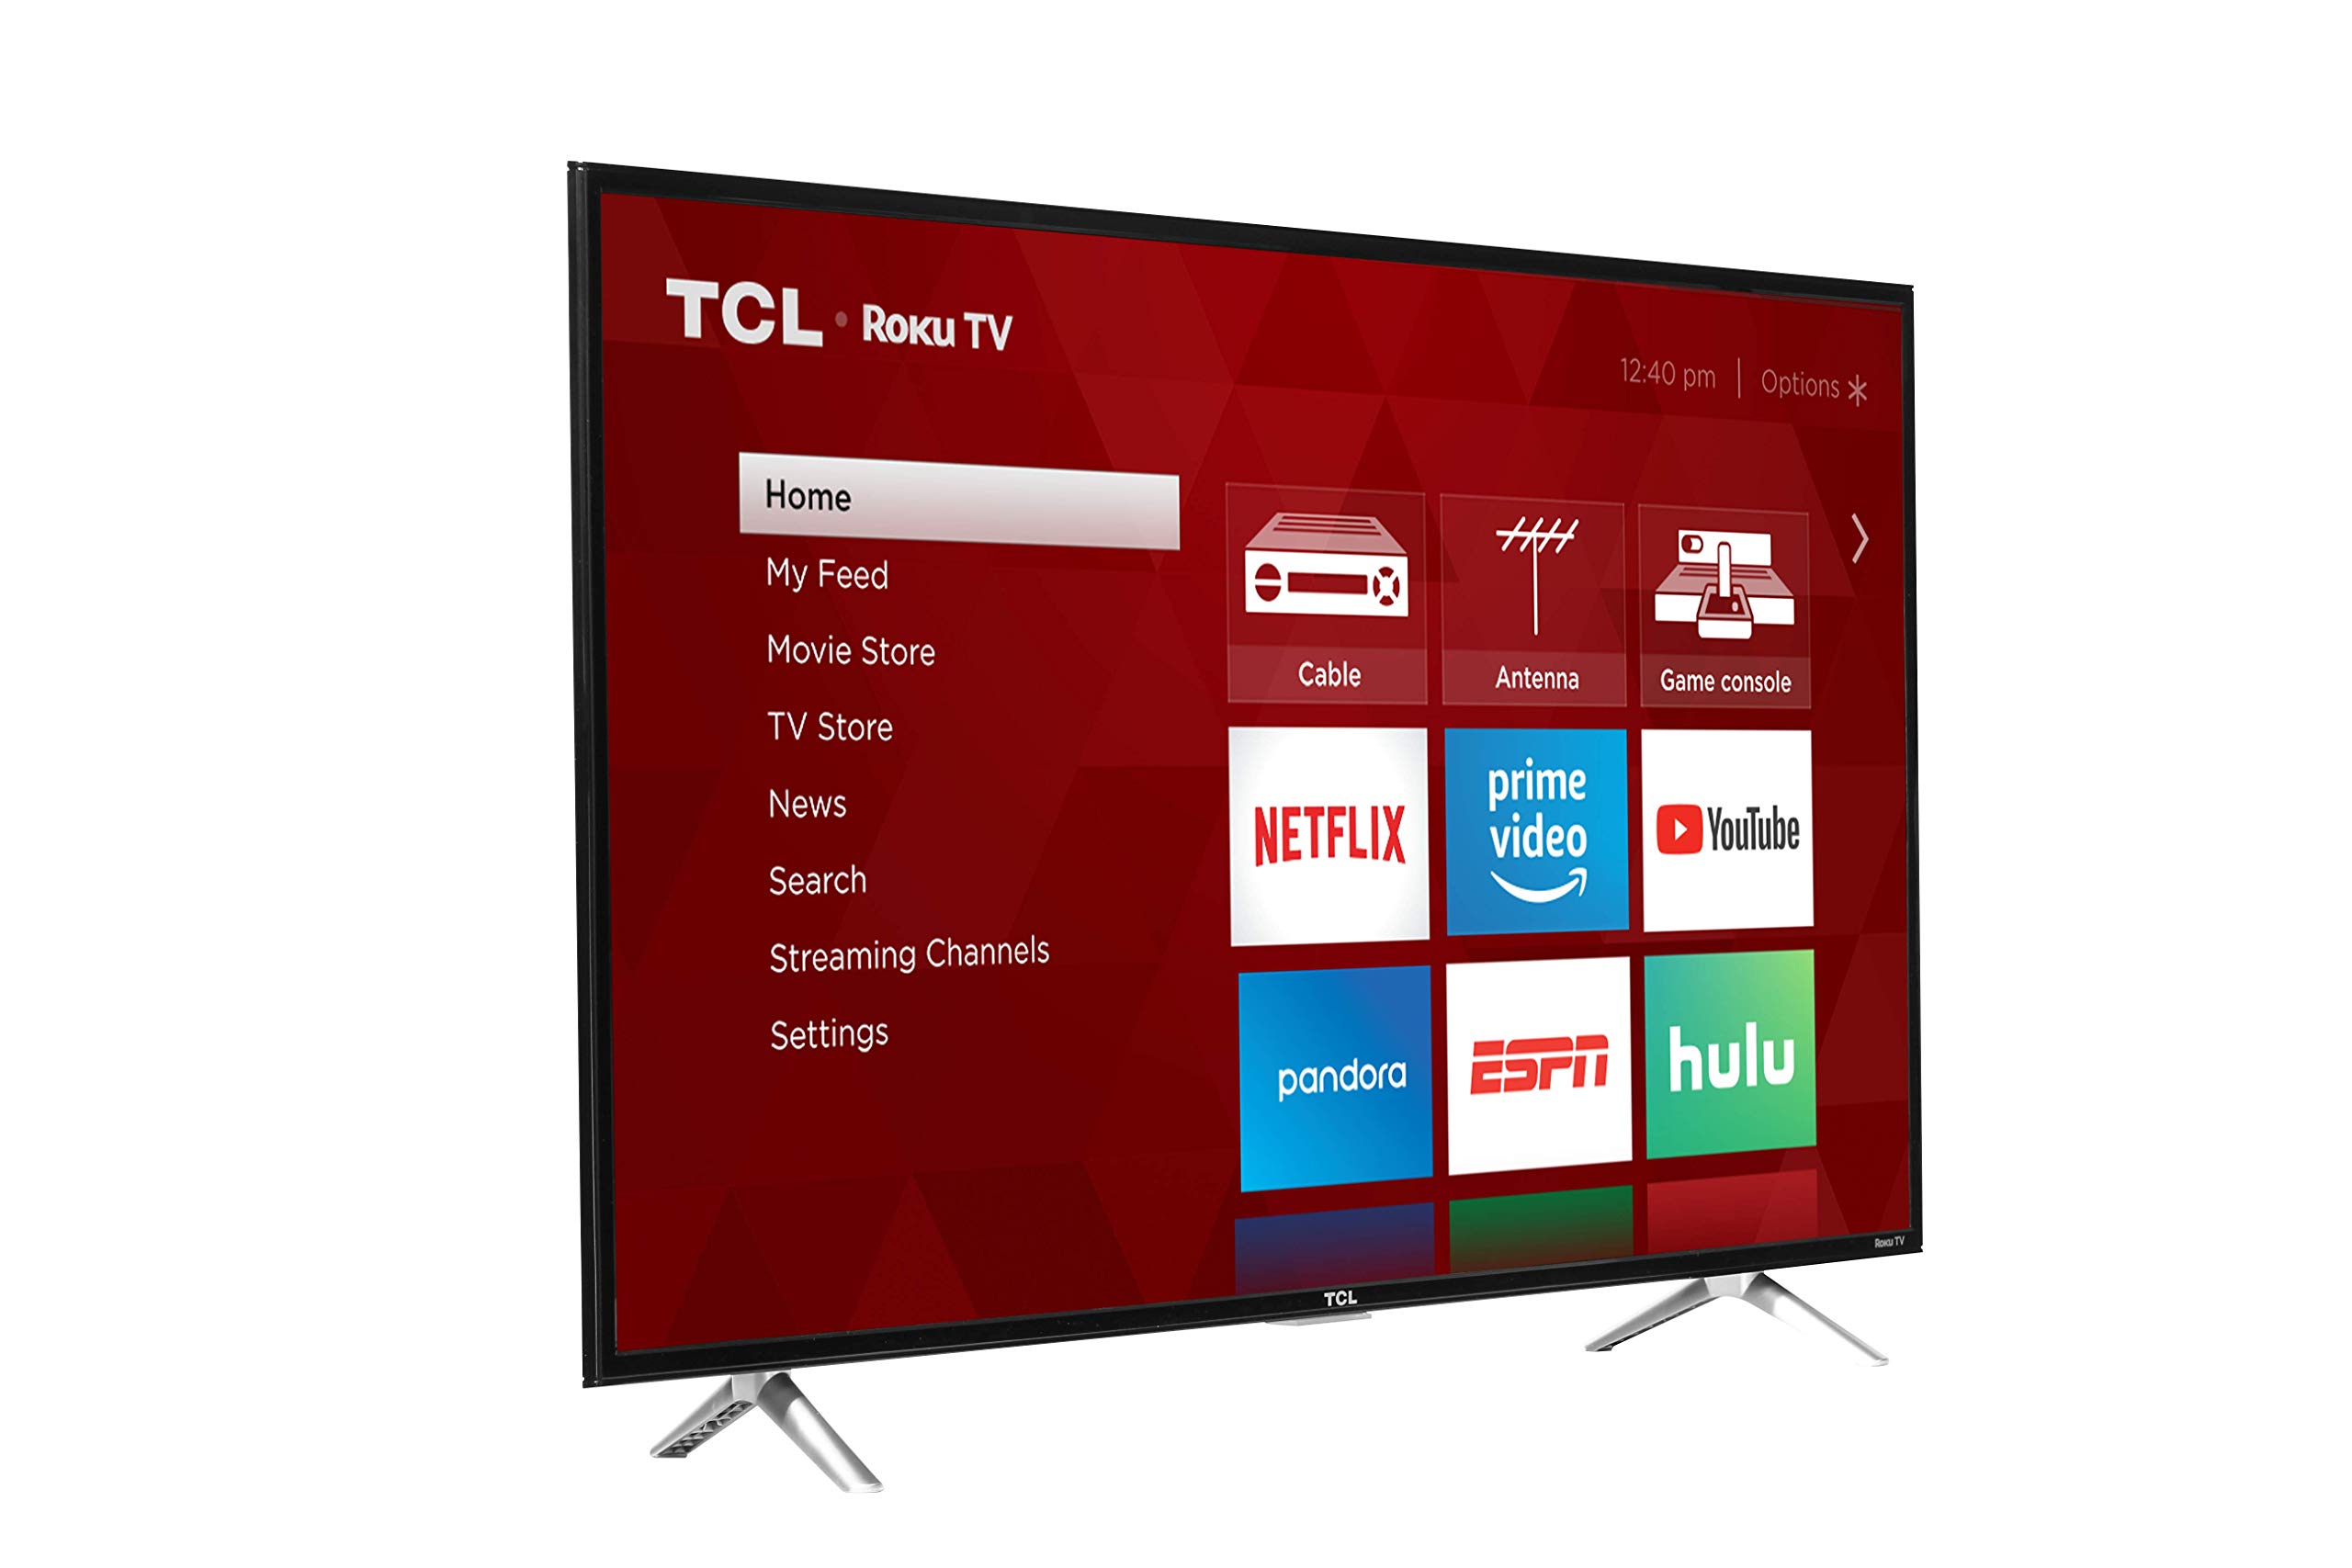 TCL 32S305 32-Inch 720p Roku Smart LED TV (2017 Model)